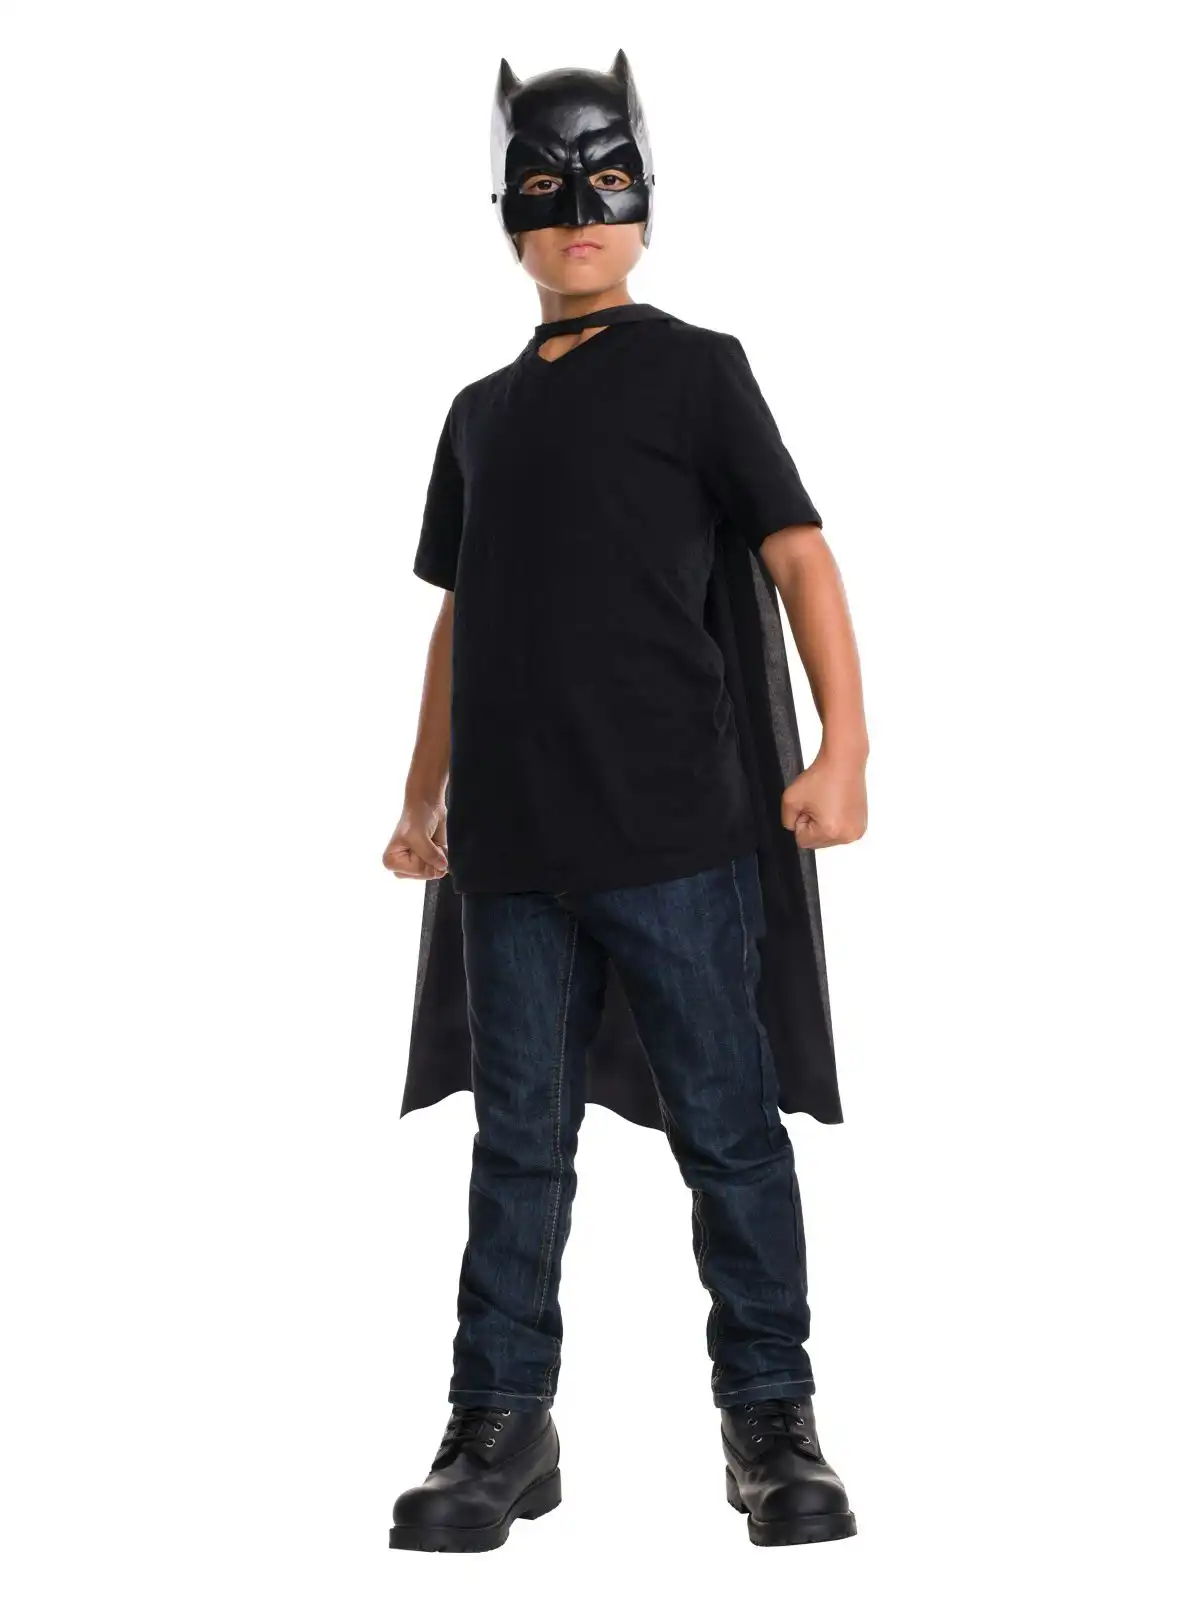 DC Comics Batman Cape And Mask Set Kids/Children Costumes/Haloween Party Black